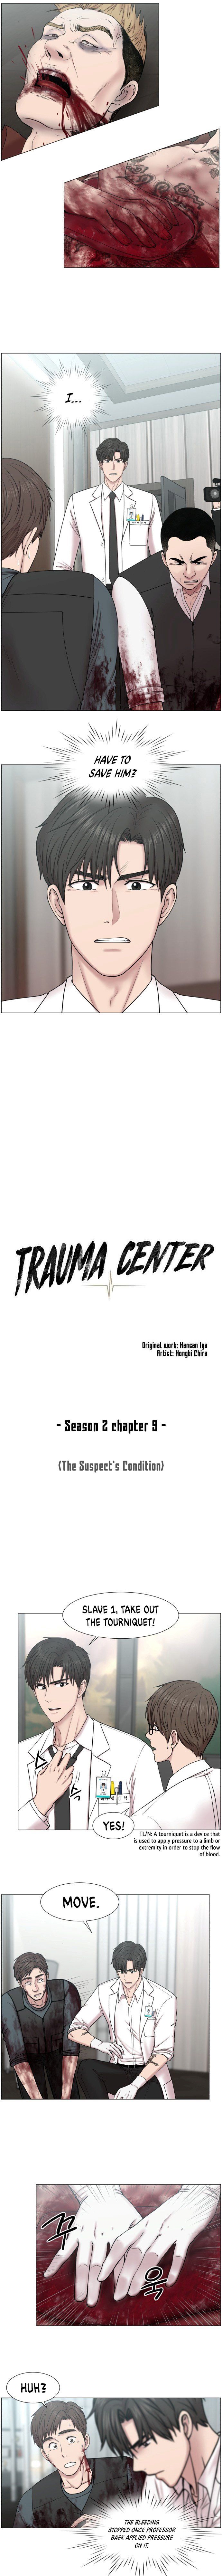 Trauma Center Chapter 74 - Page 5